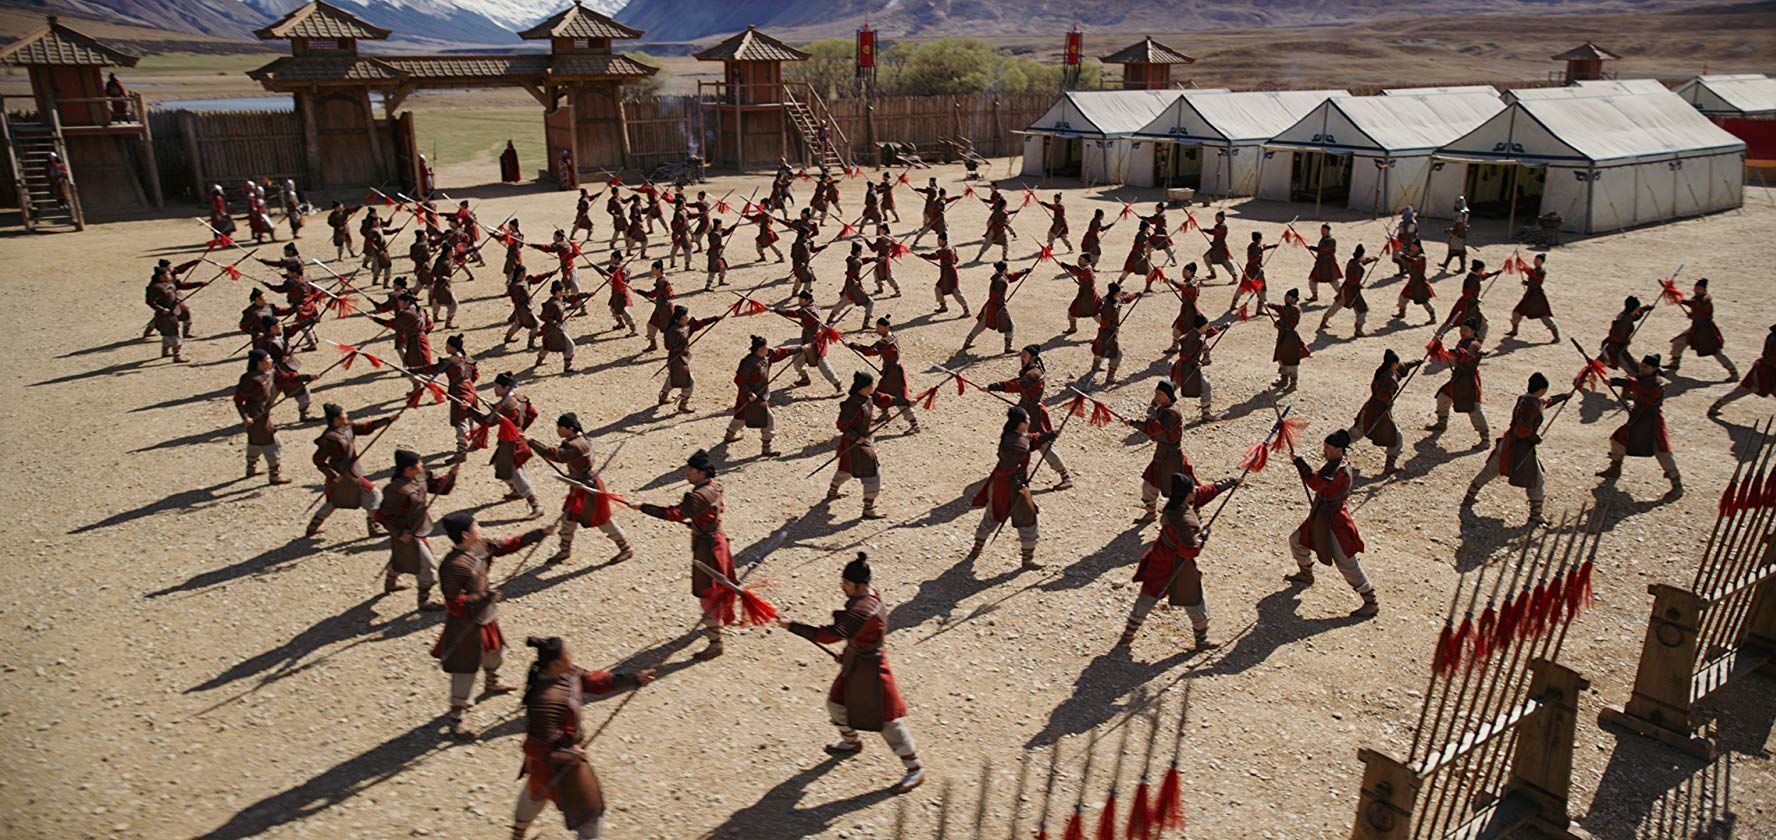 Trailer Rilis, Ini 7 Fakta Film Mulan Live Action 2020